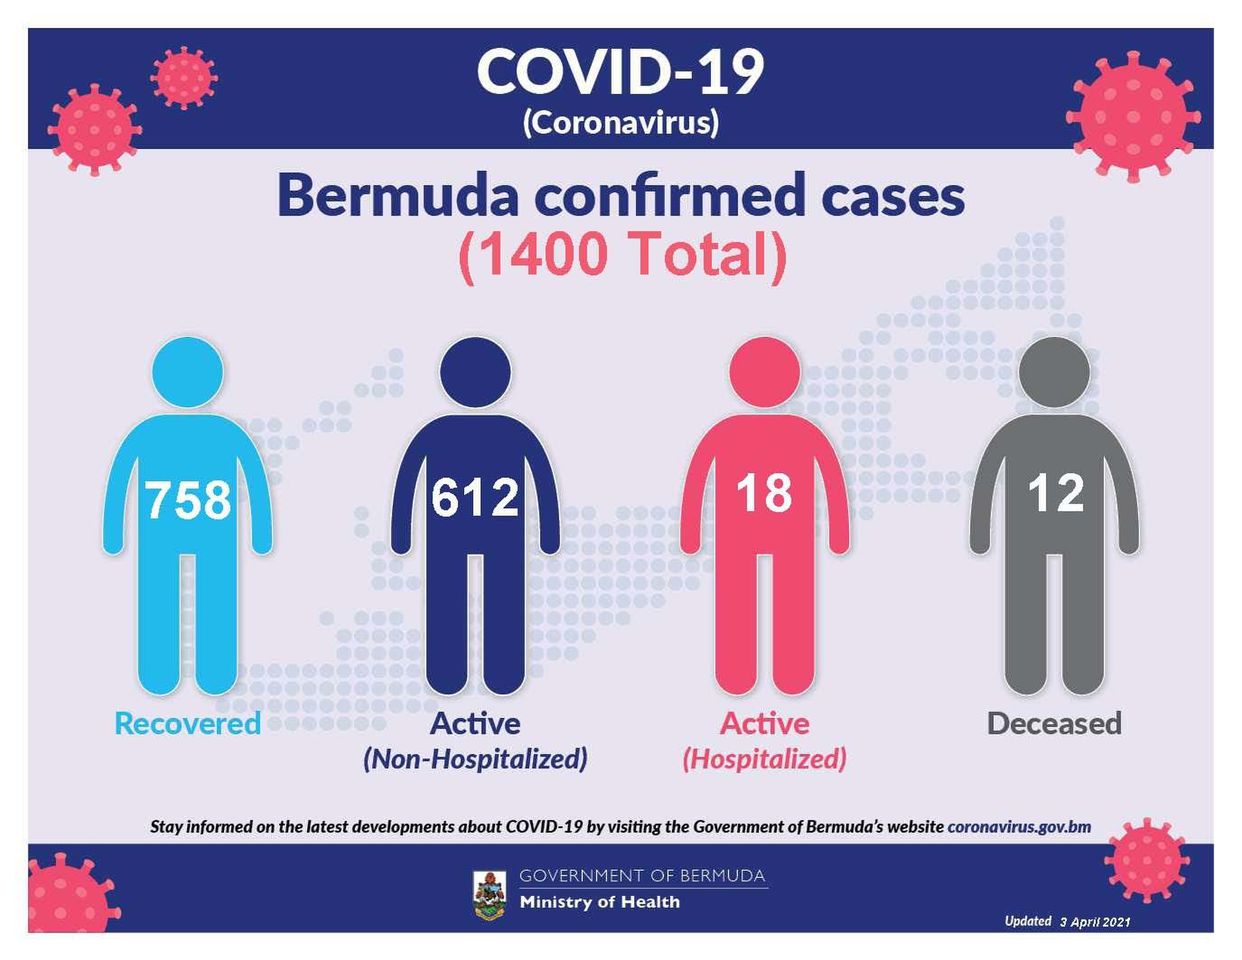 Total 14 people have died of COVID-19 in Bermuda as of 4 April 2021